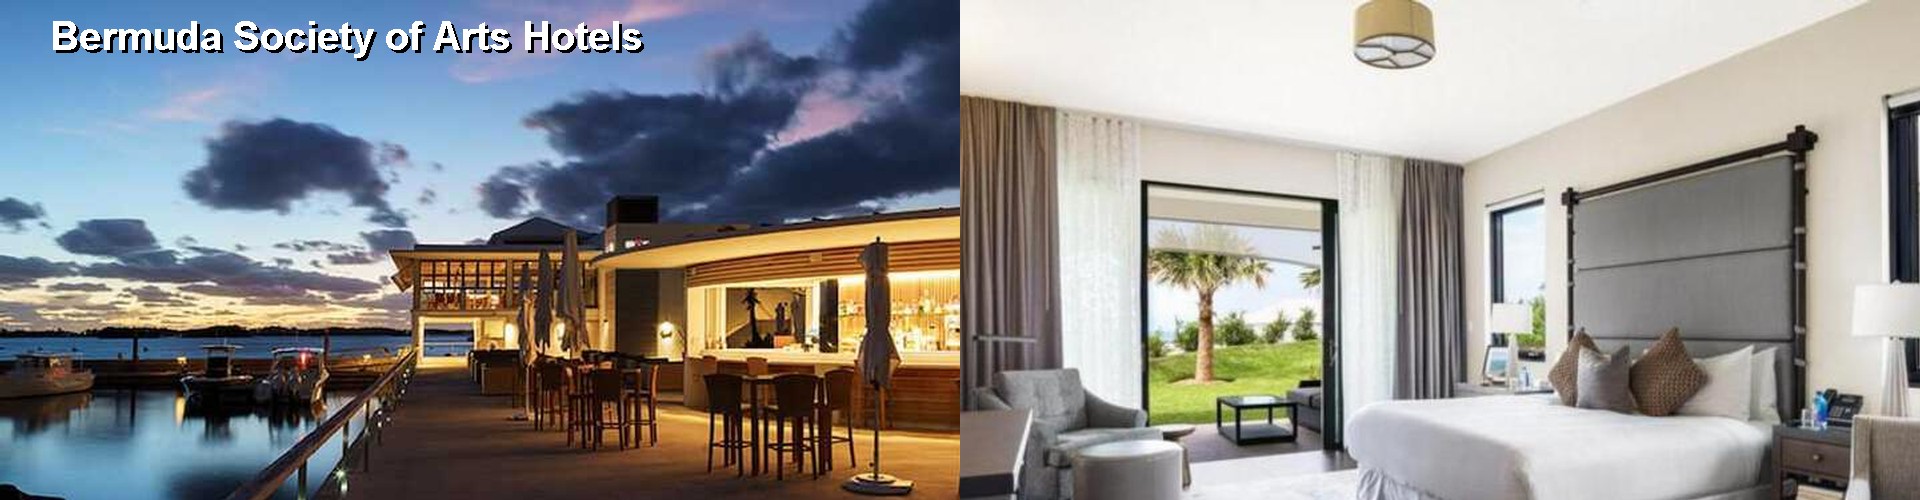 5 Best Hotels near Bermuda Society of Arts